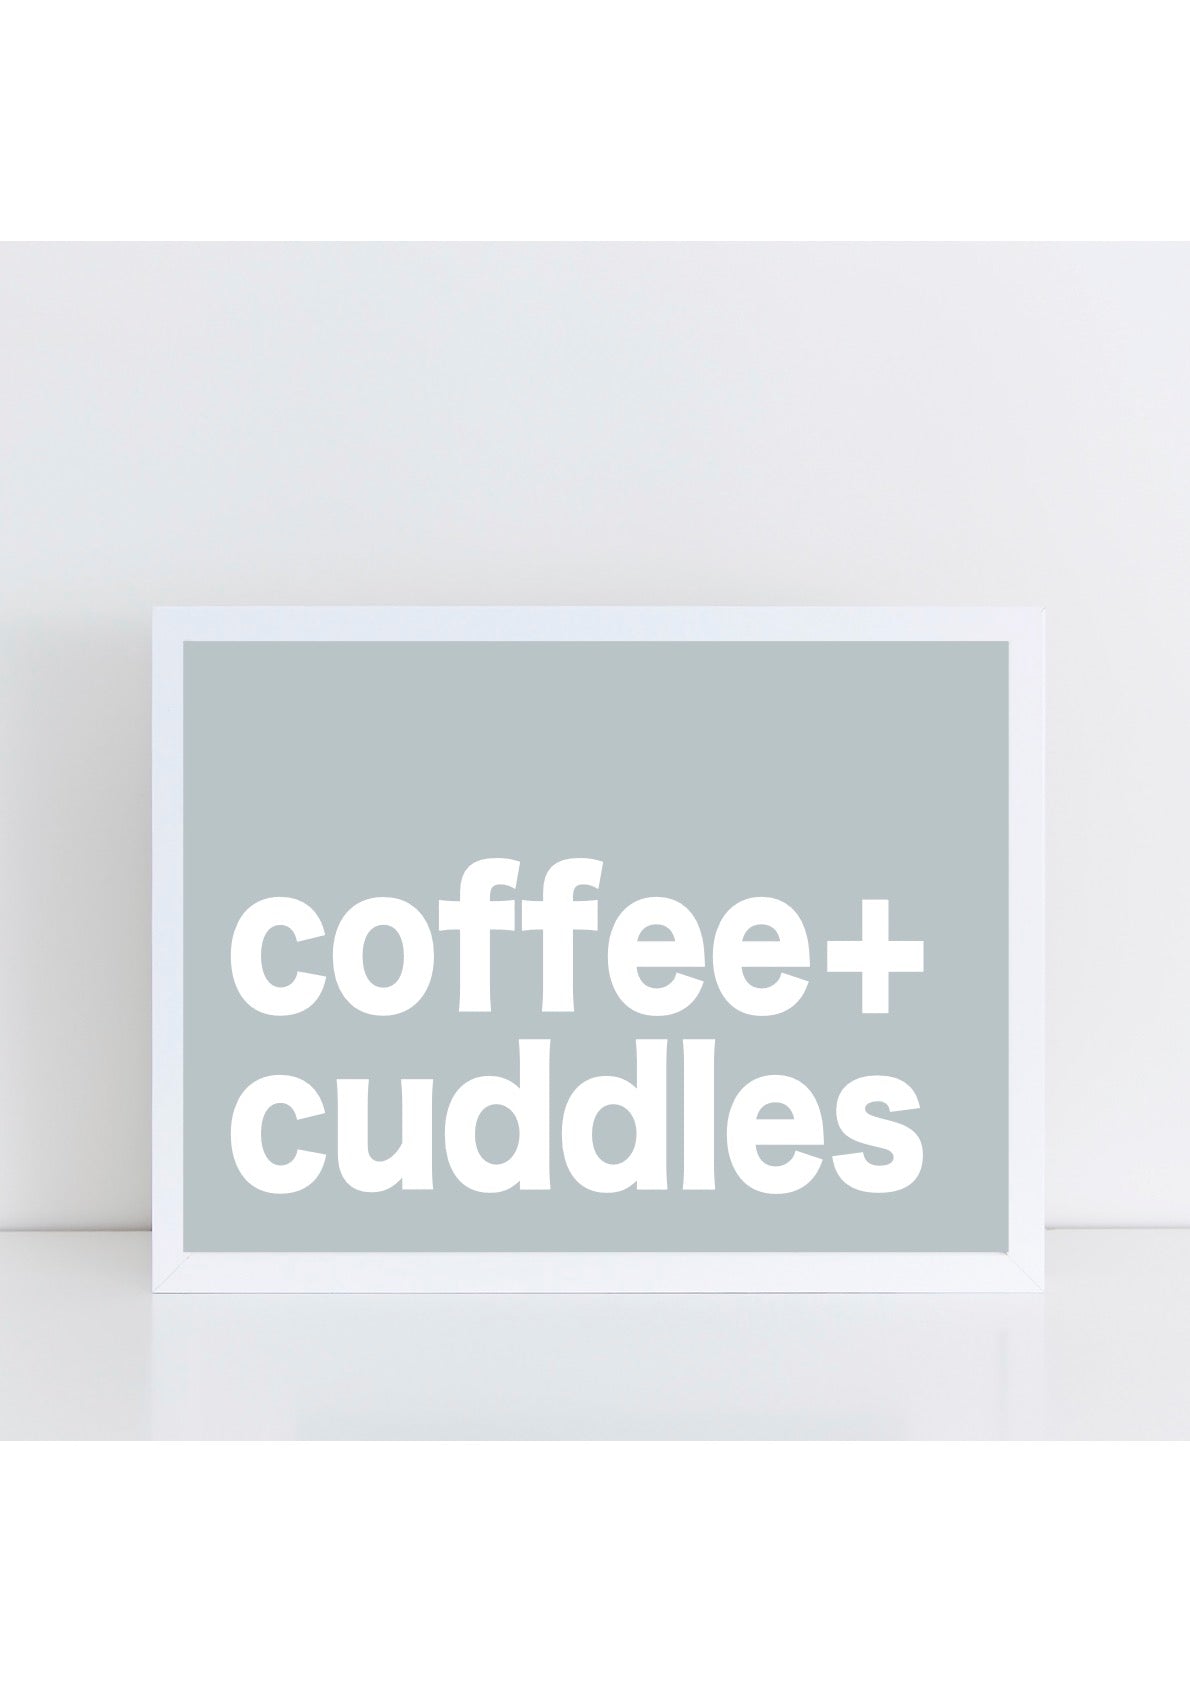 Coffee + Cuddles Print - Blue